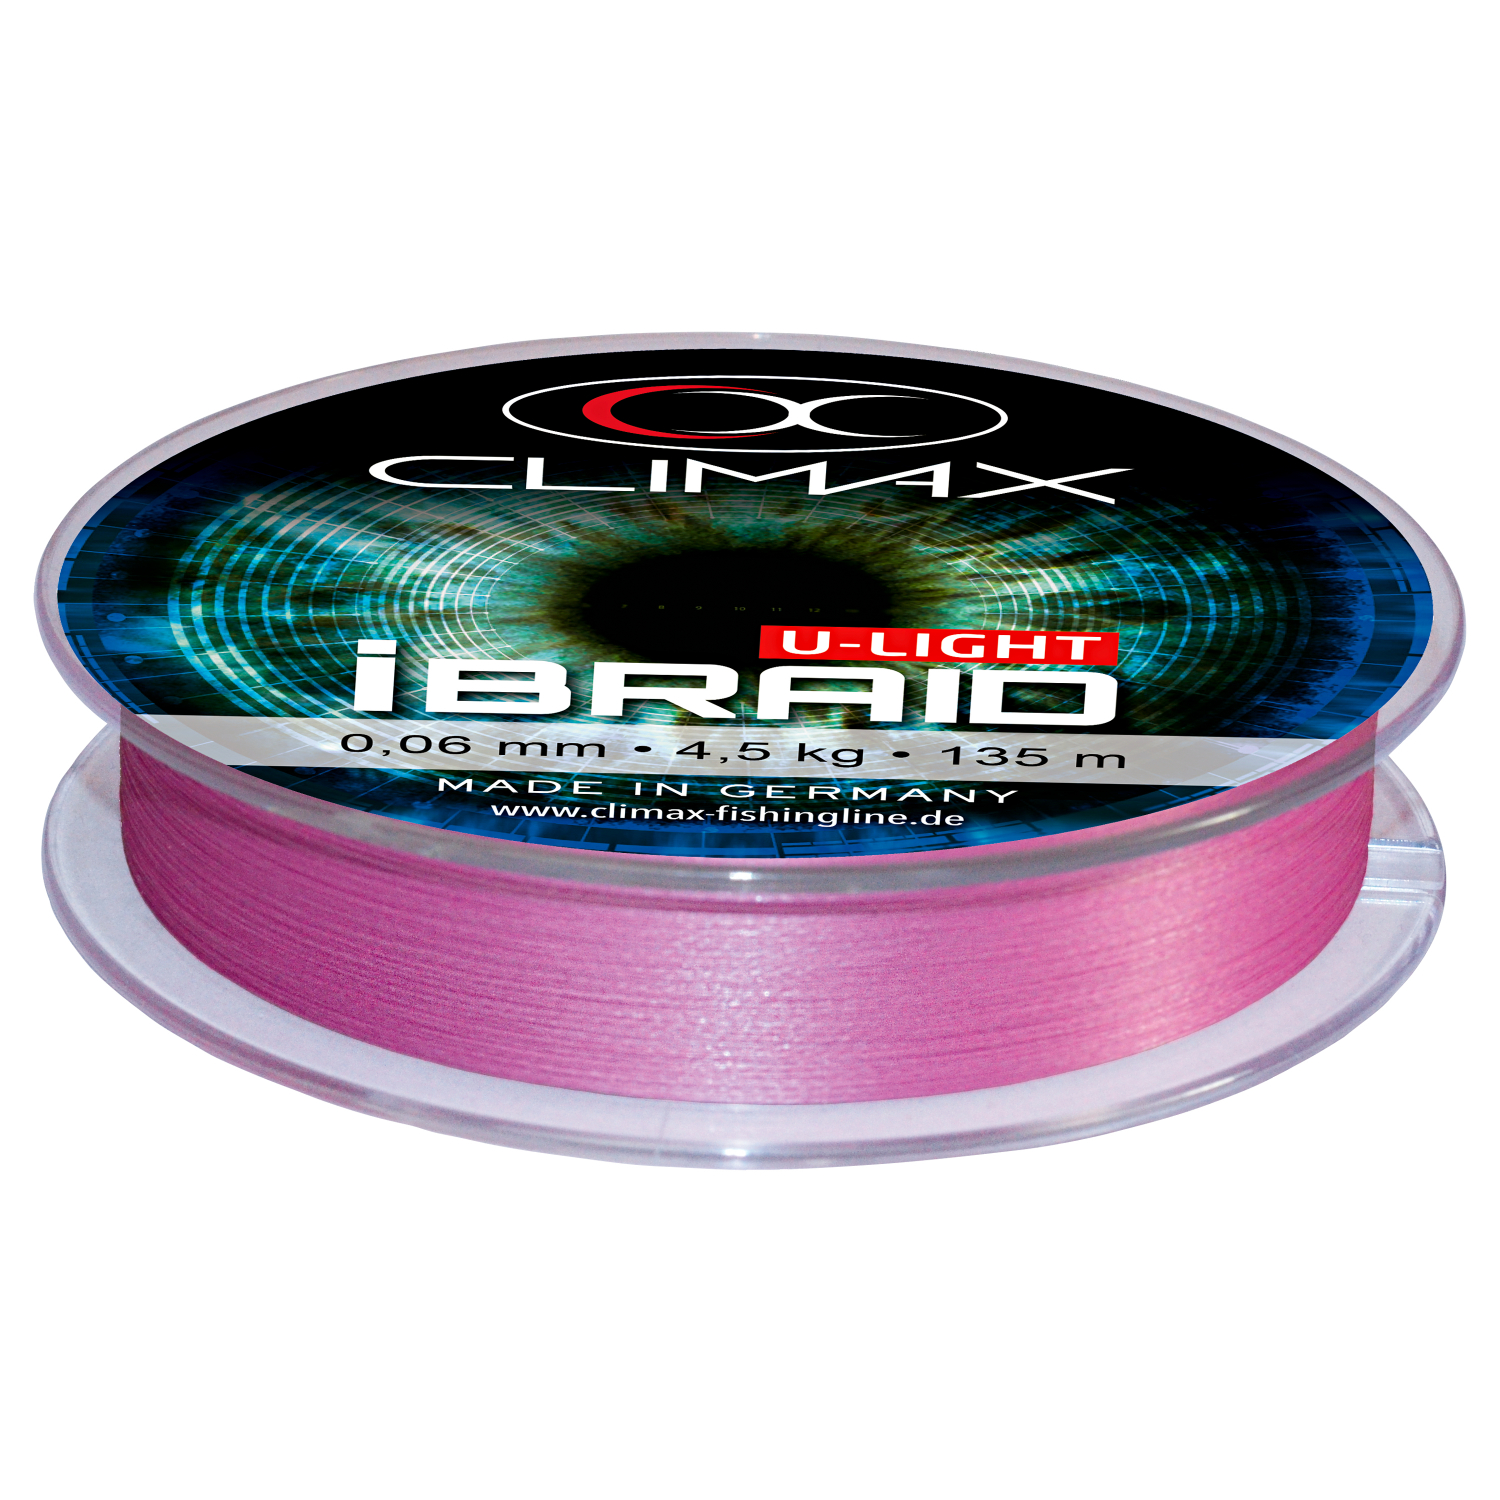 https://images.askari-sport.com/en/product/1/large/climax-fishing-line-ibraid-ulight-fluo-purple-135-m.jpg